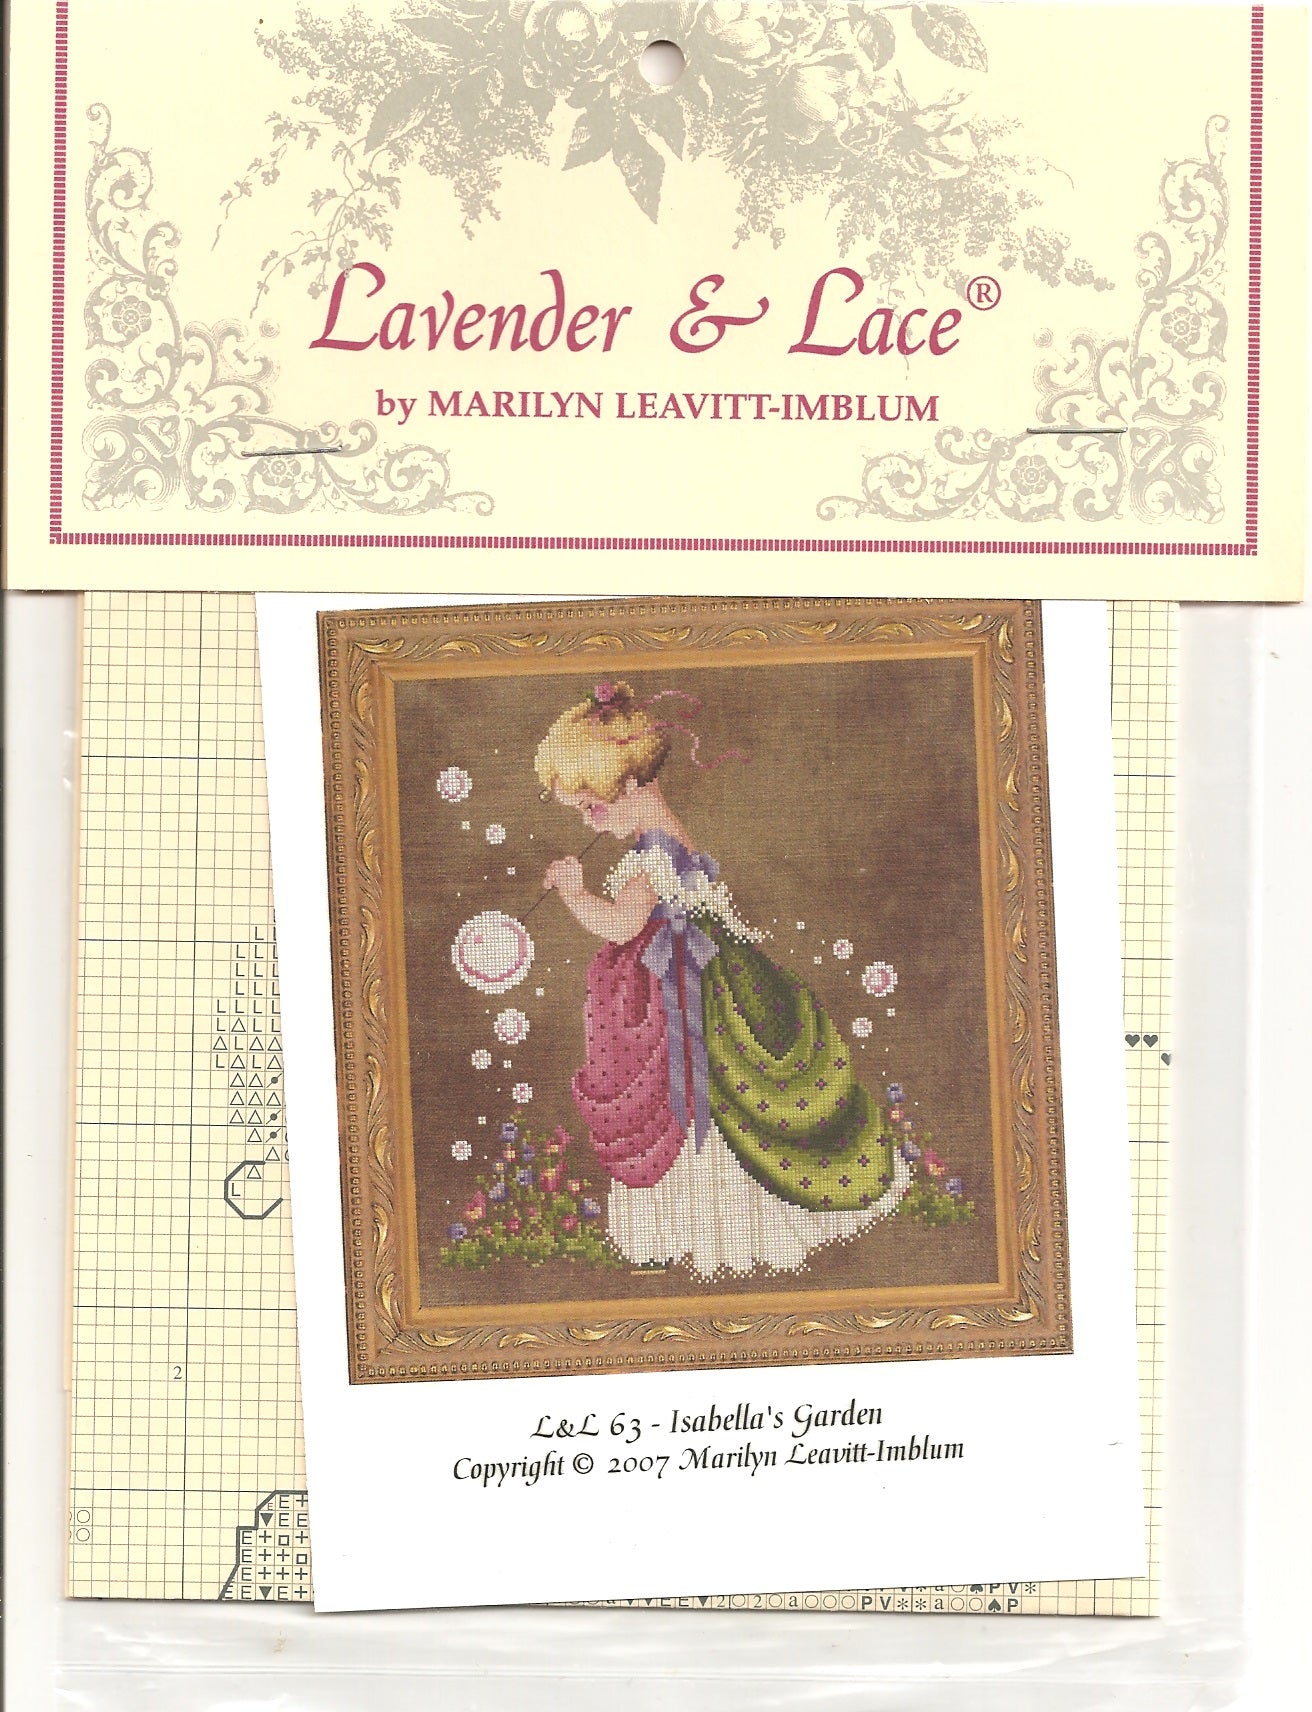 Lavender & Lace Isabella's Garden L&L63 cross stitch pattern